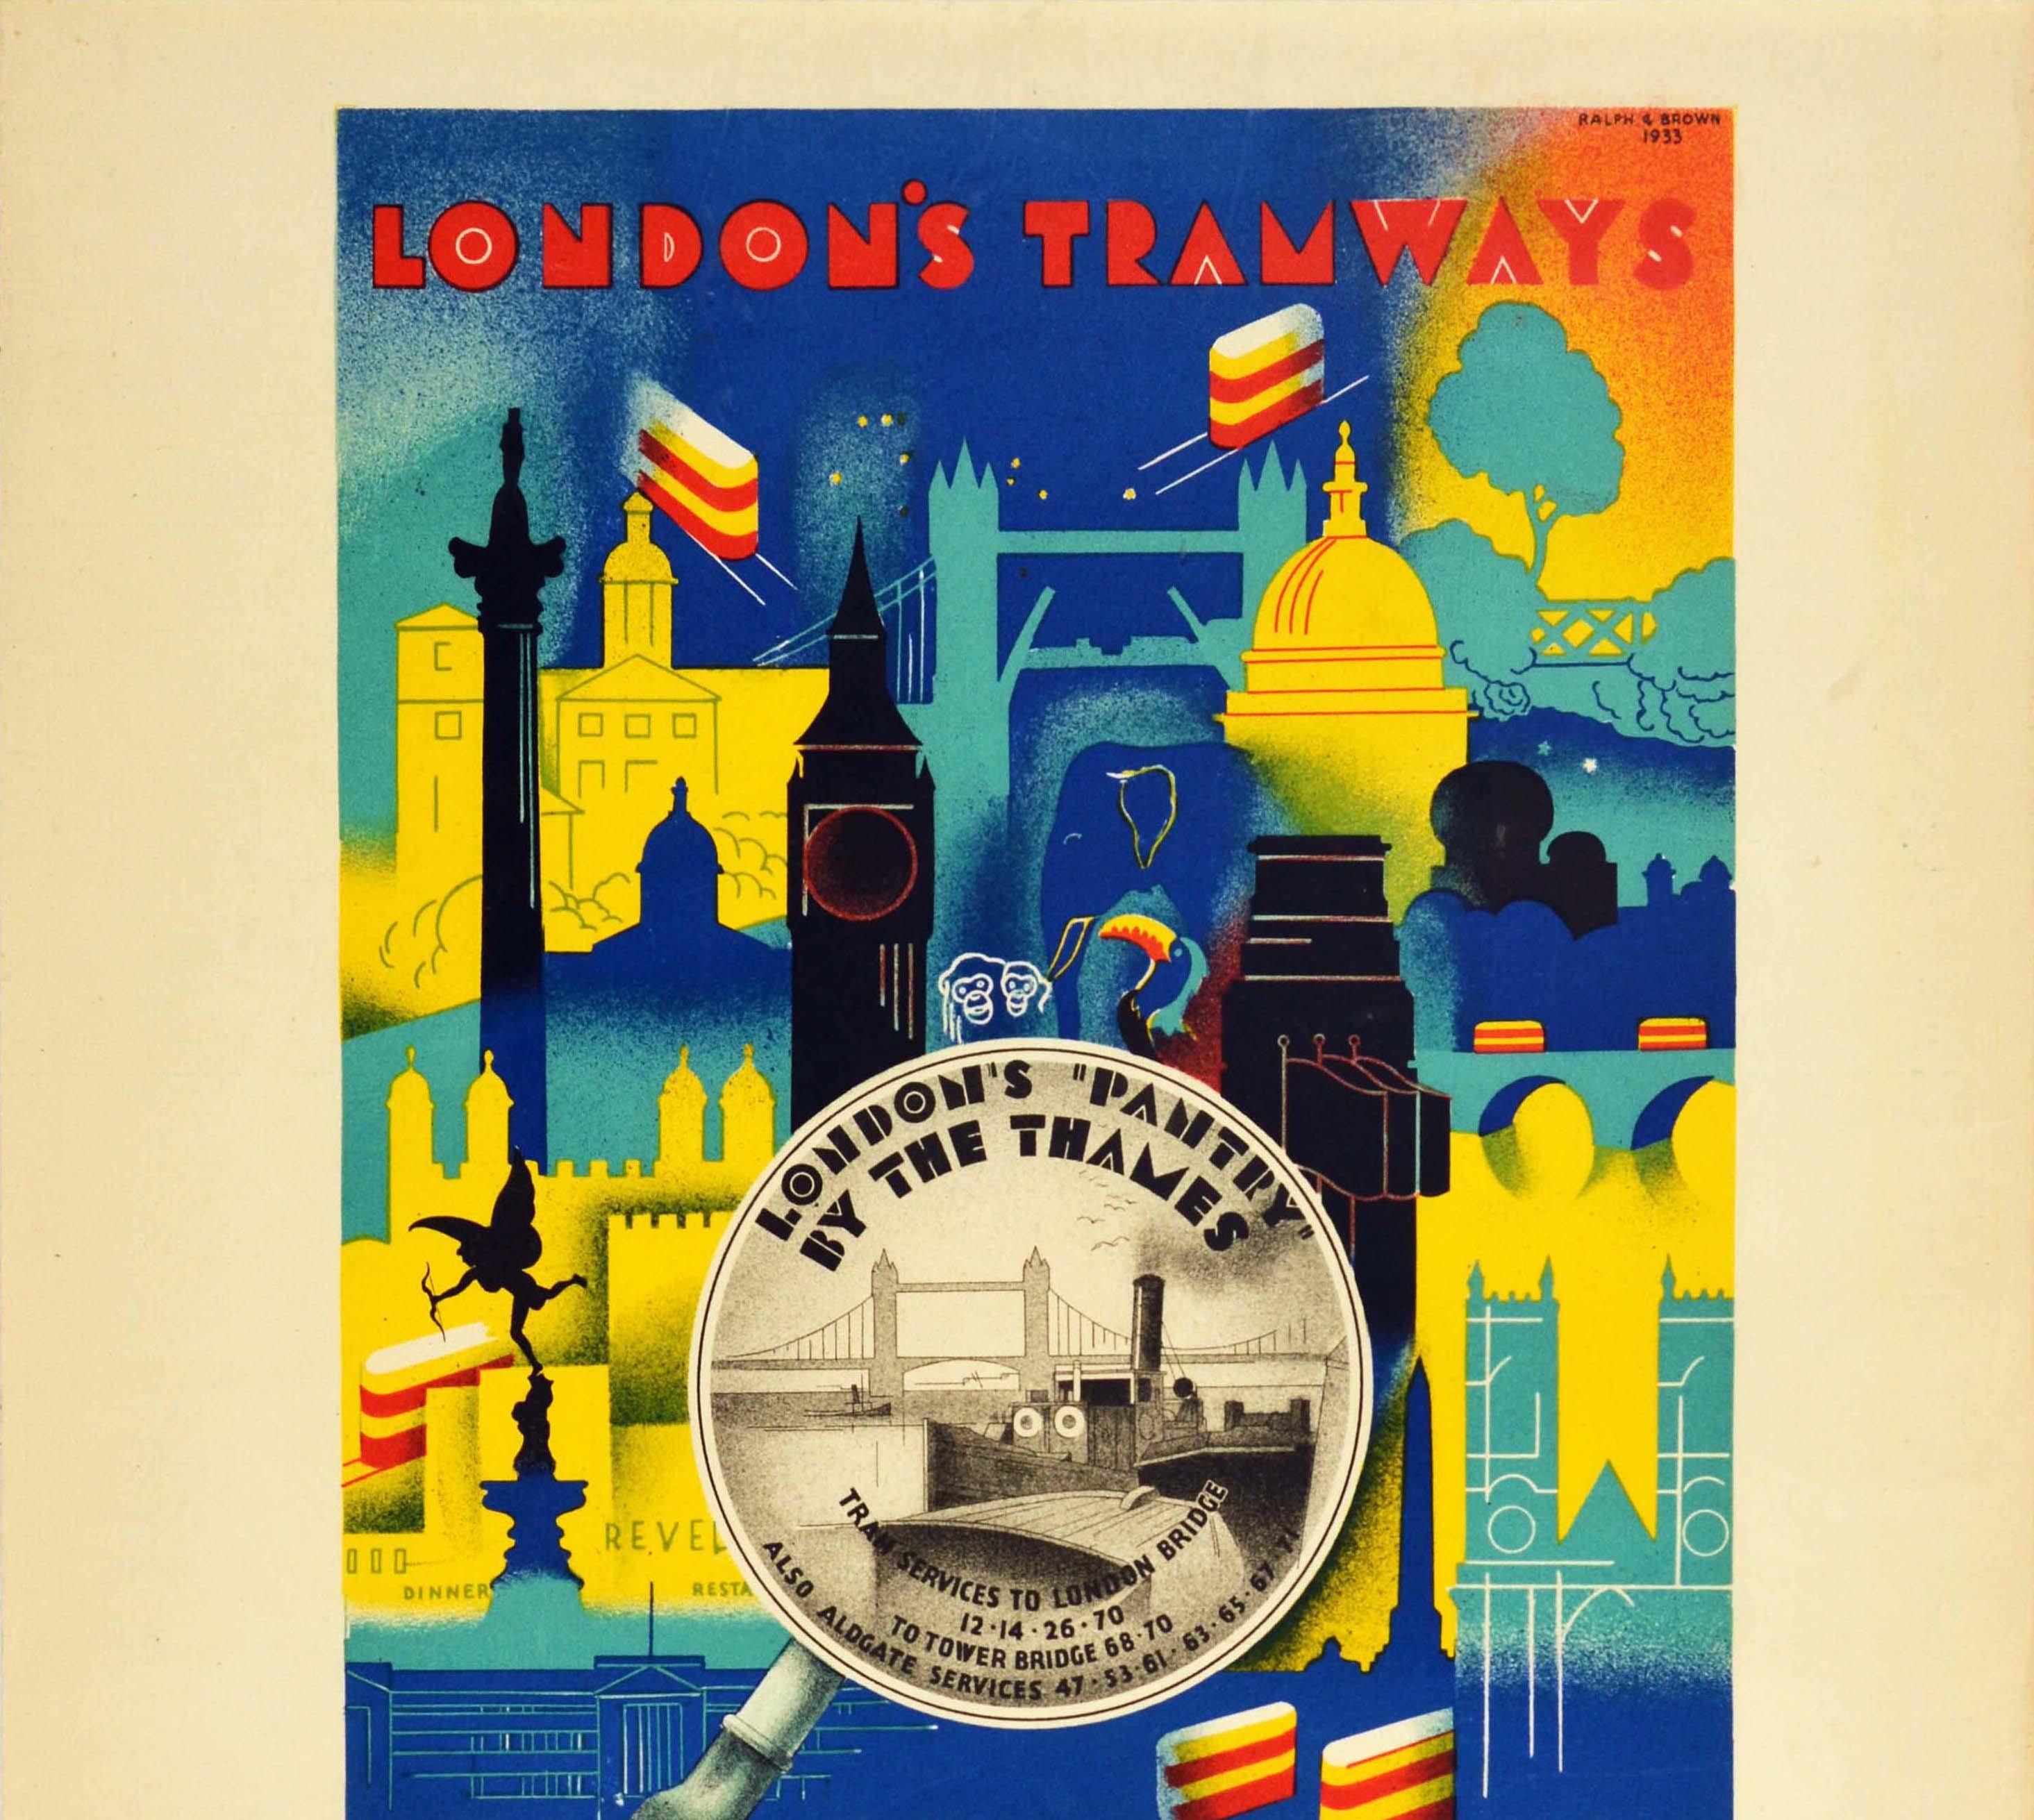 Original Vintage Travel Poster London's Tramways See More Of London Transport - Print by P Irwin Brown Rickman Ralph